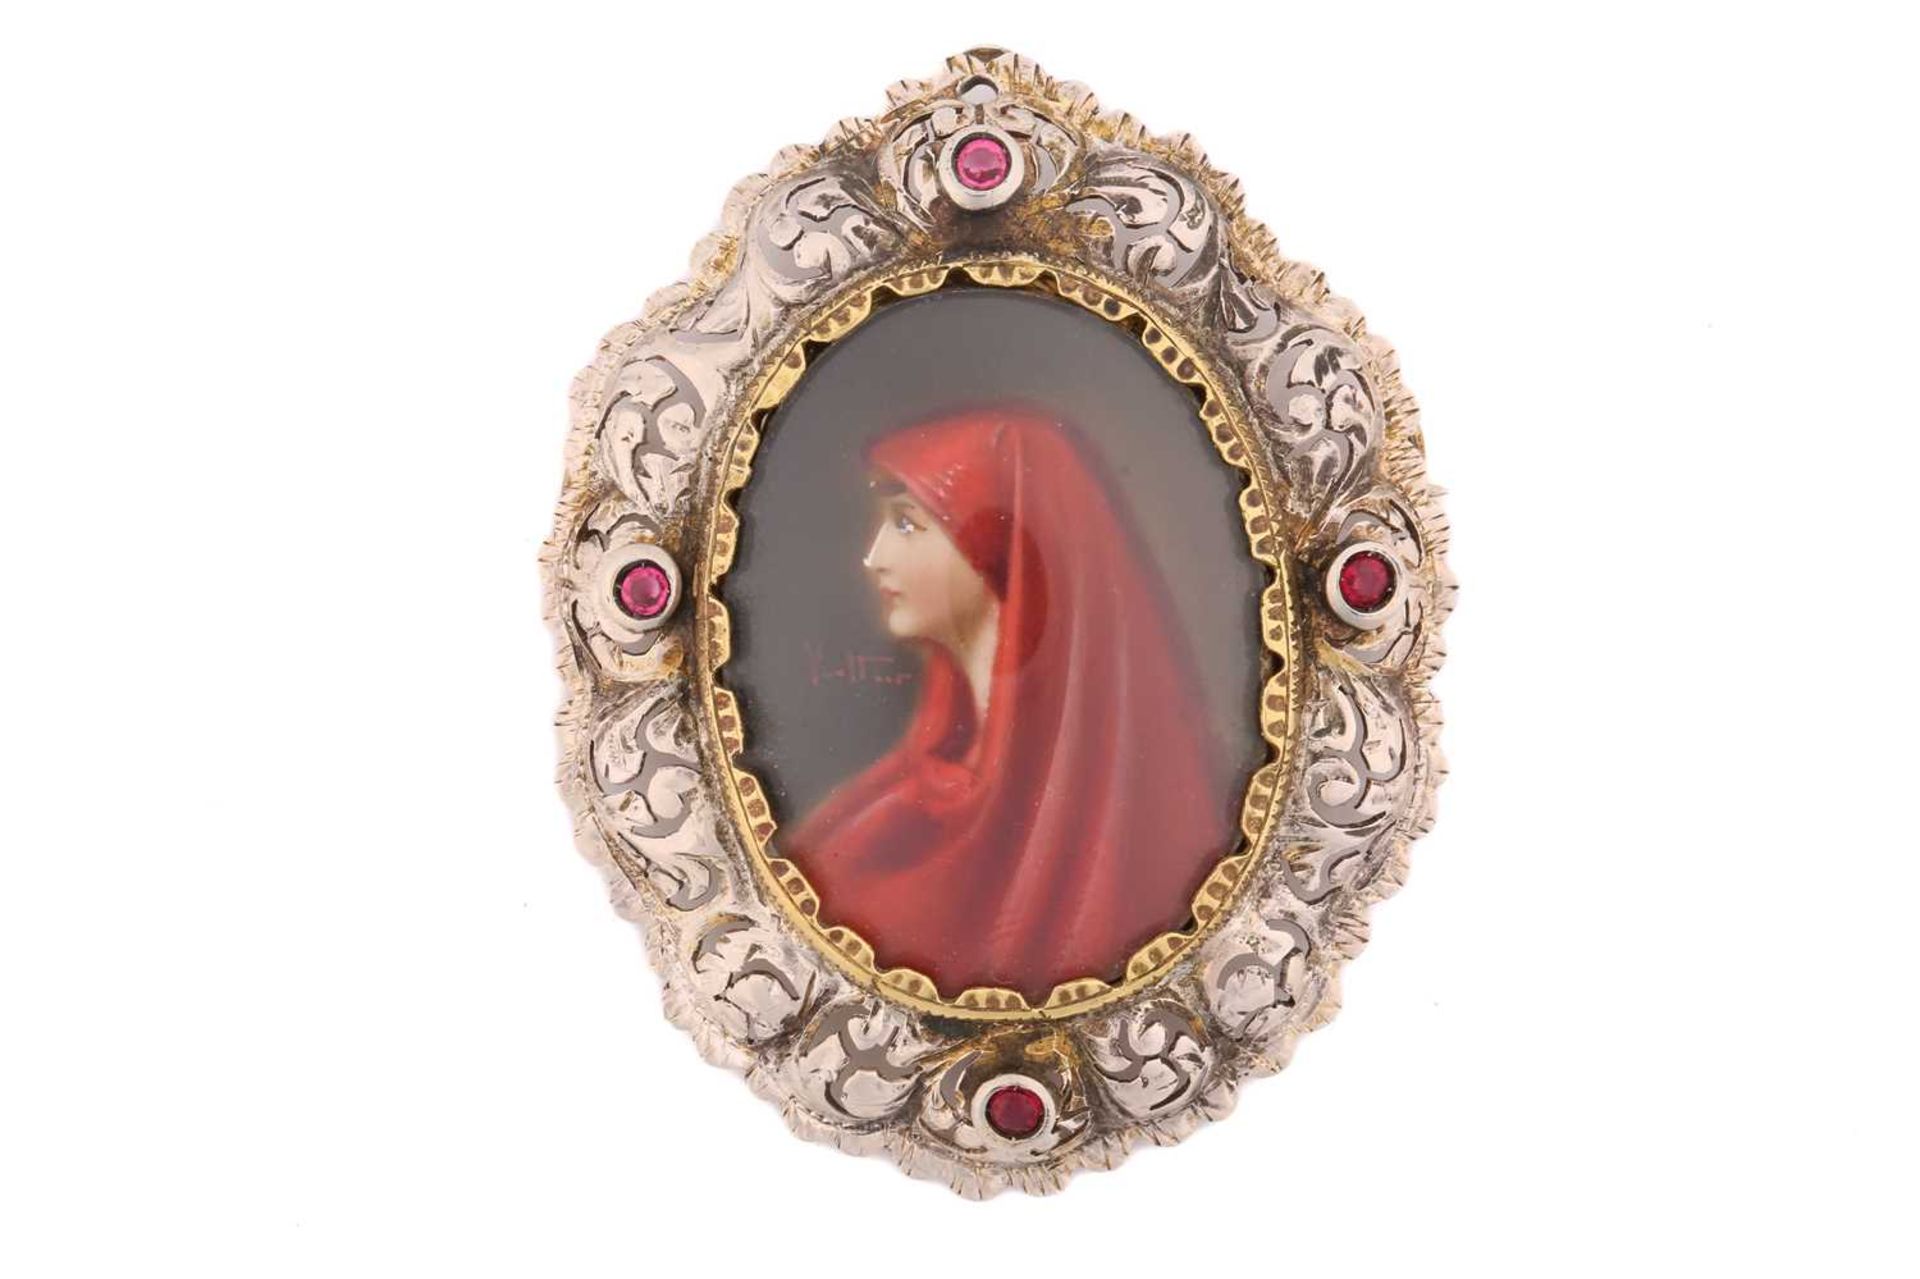 A miniature portrait brooch, depicting Saint Fabiola, after Jean-Jacques Henner, enamel painted on